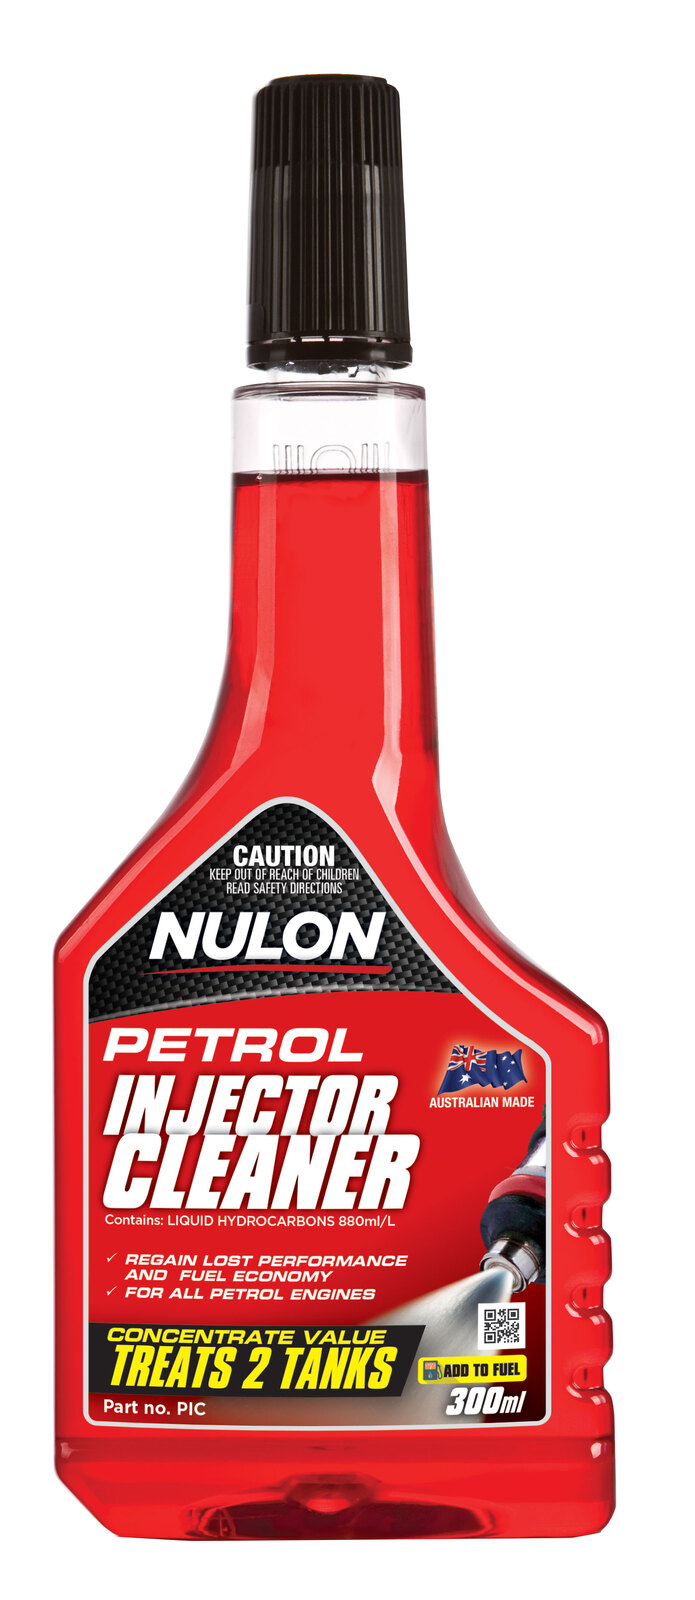 NULON 300ml Petrol Injector Cleaner, Each